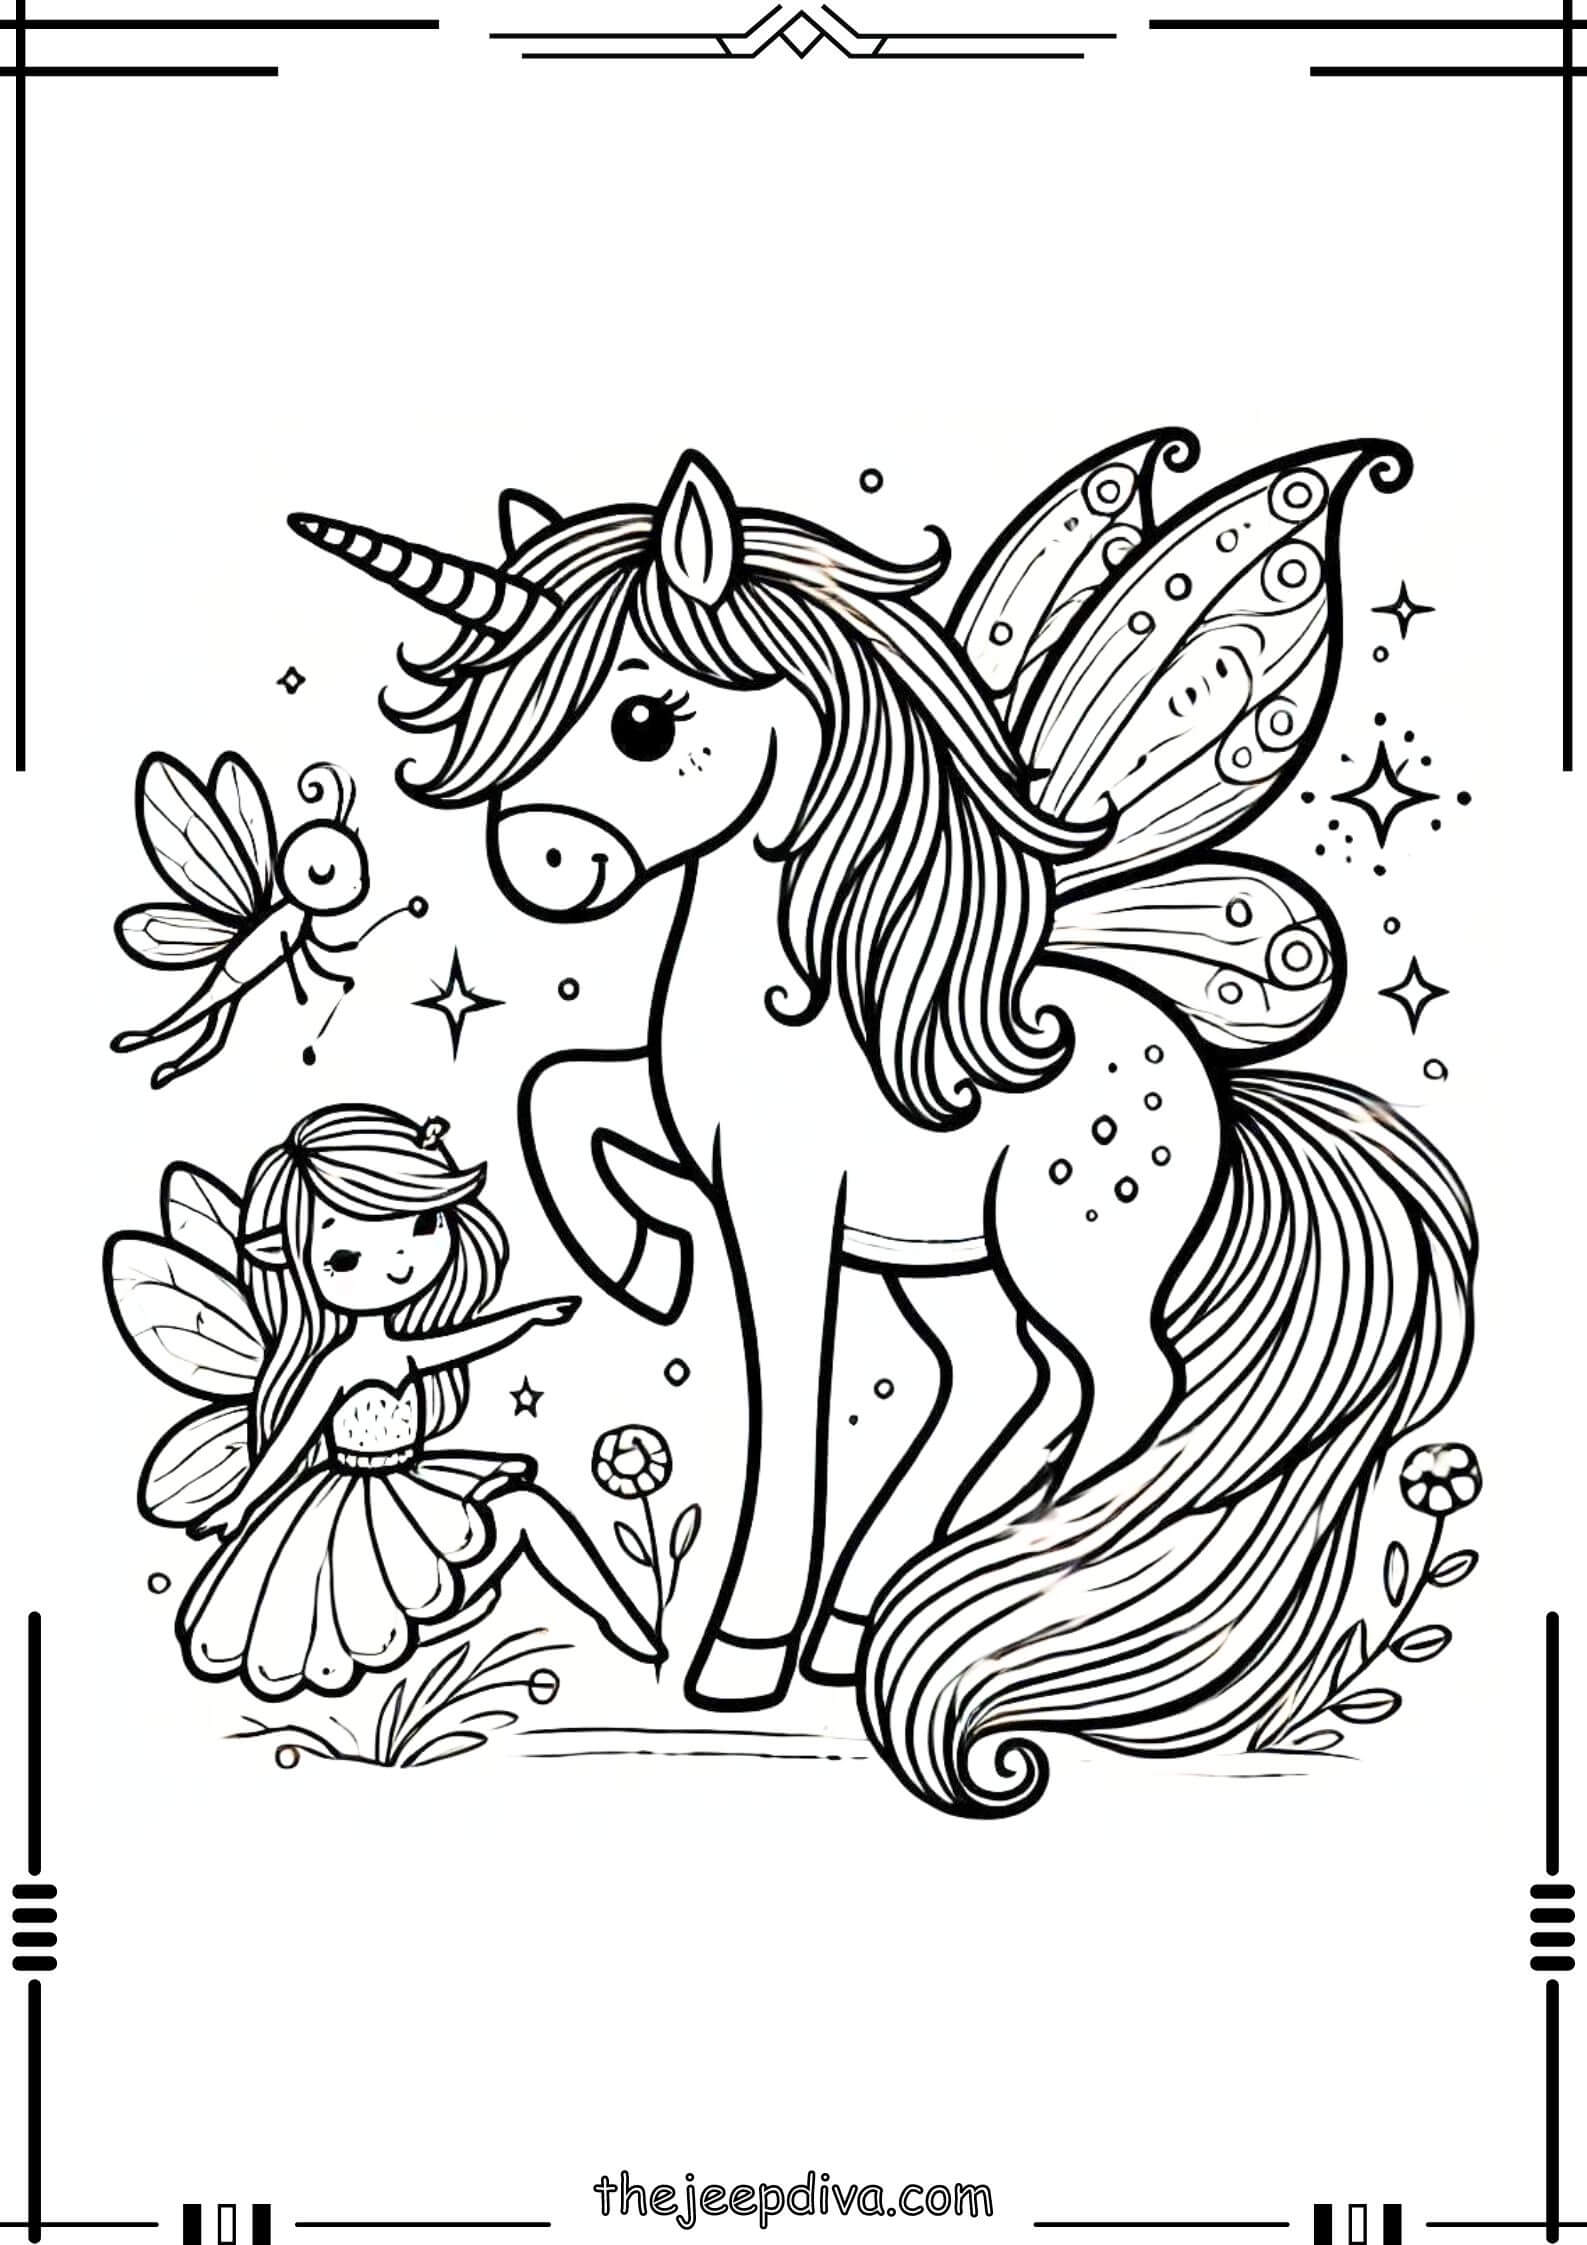 unicorn-coloring-page-medium-20